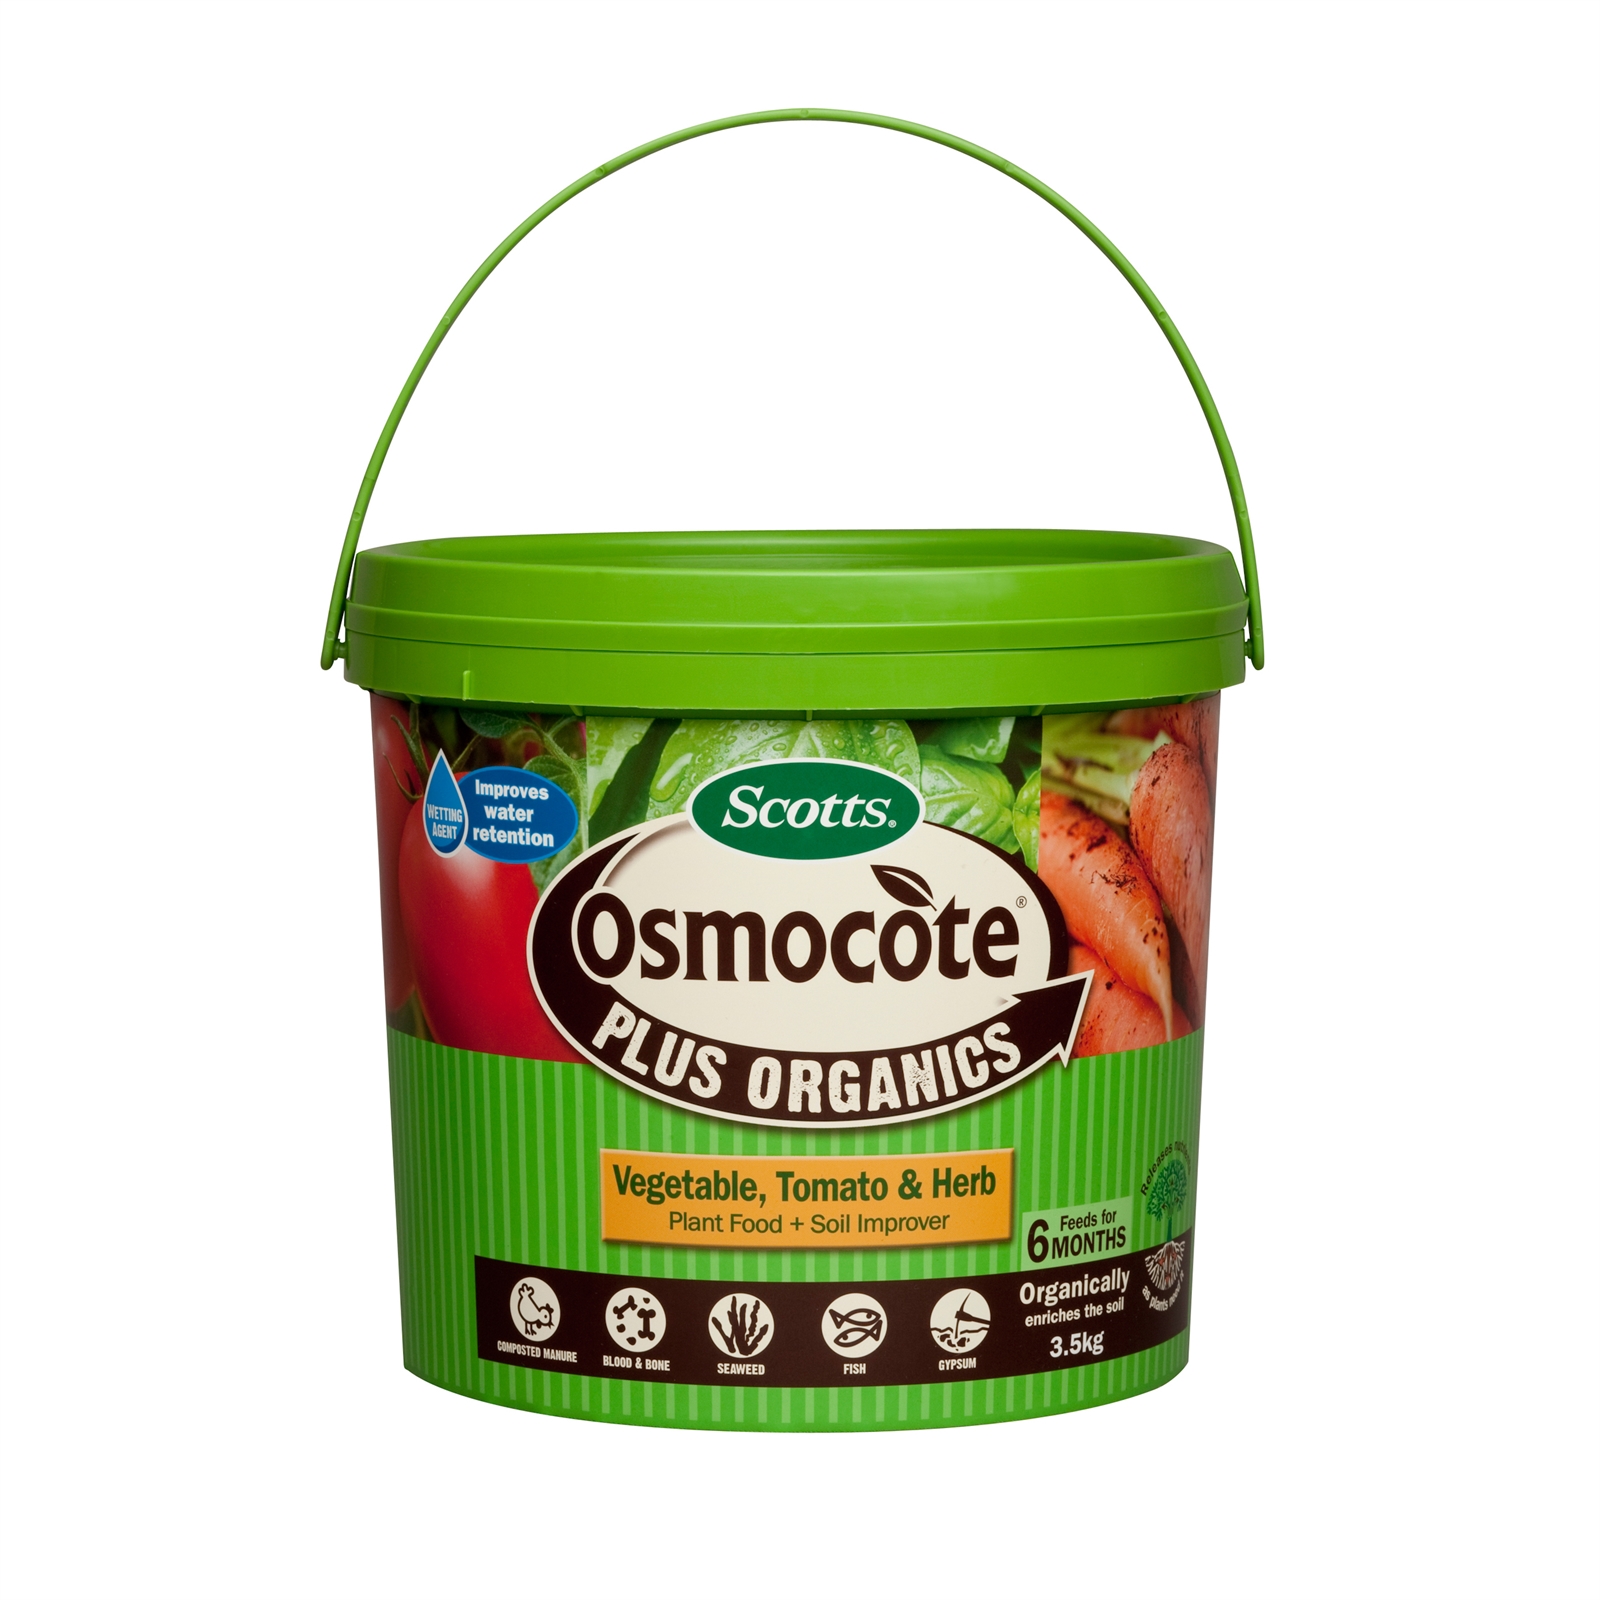 Osmocote Plus Organics 3.5kg Vegetable Tomato And Herb Plant Food